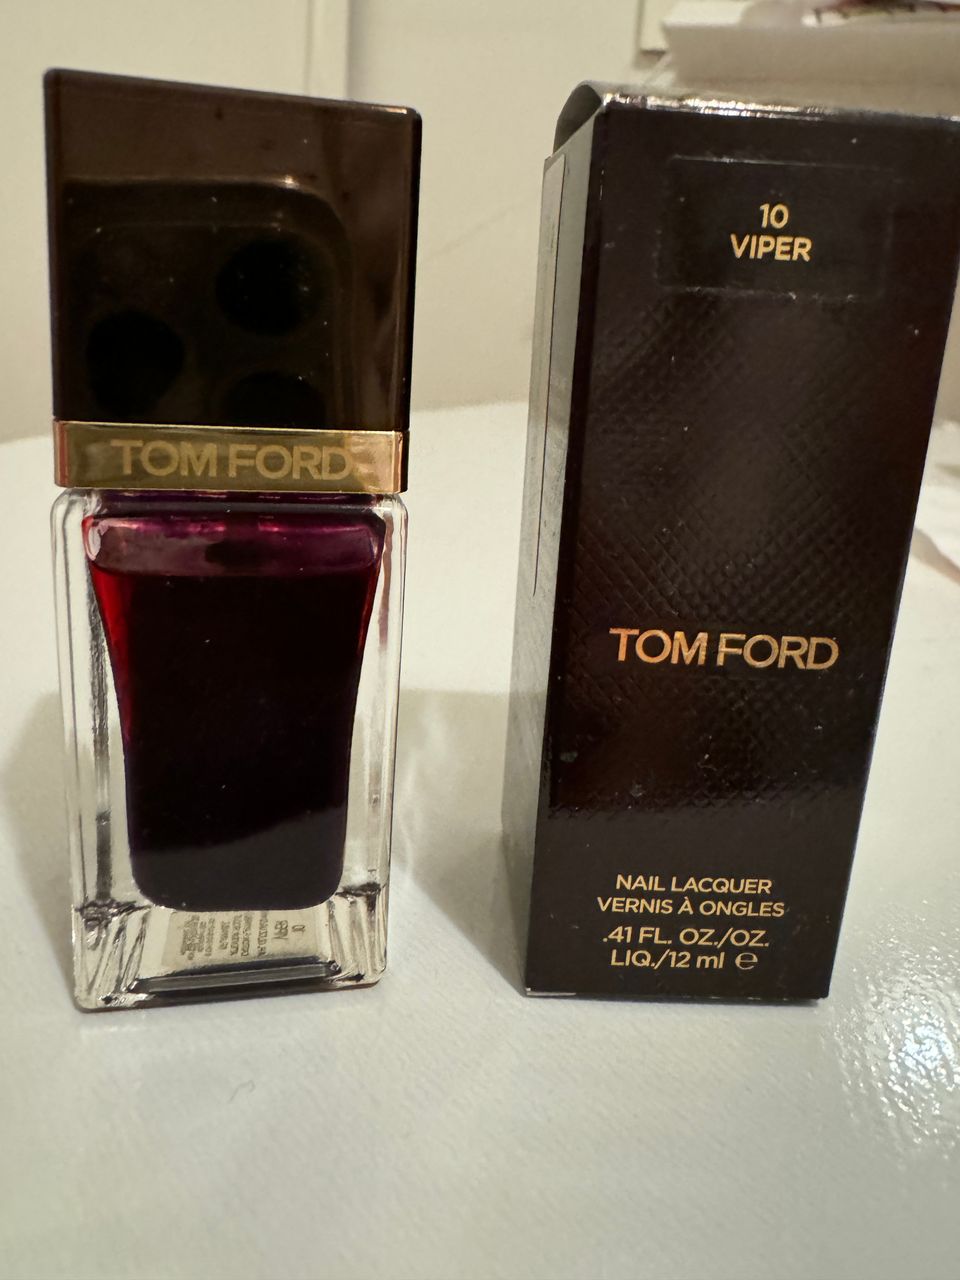 Tom Ford kynsilakka 10 viper